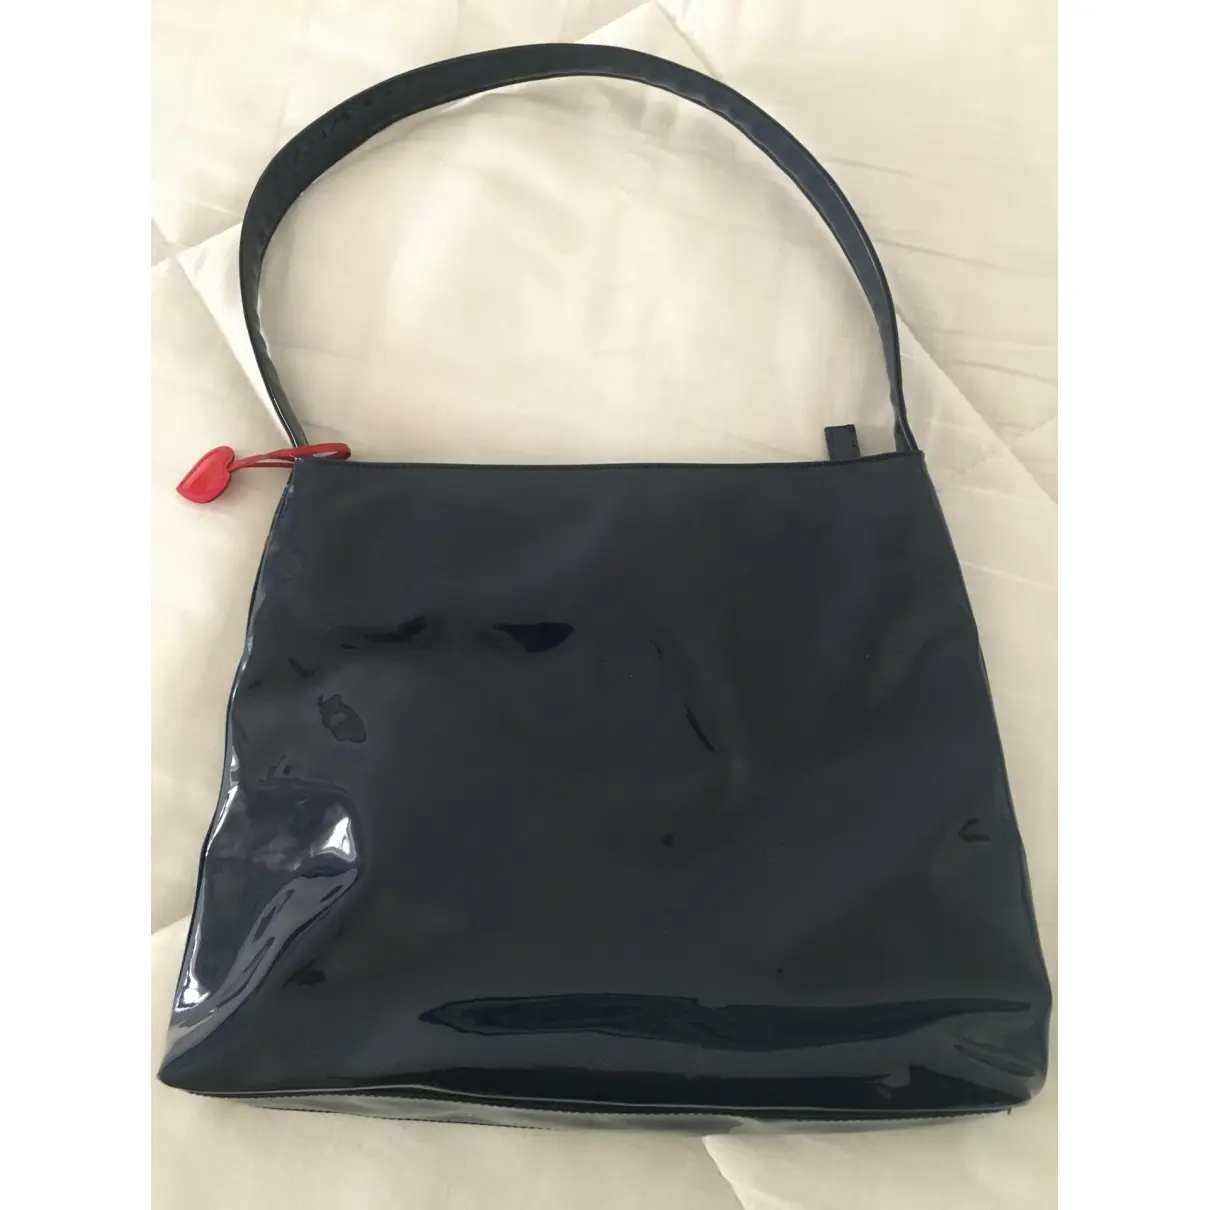 Buy Blugirl folies Patent leather handbag online